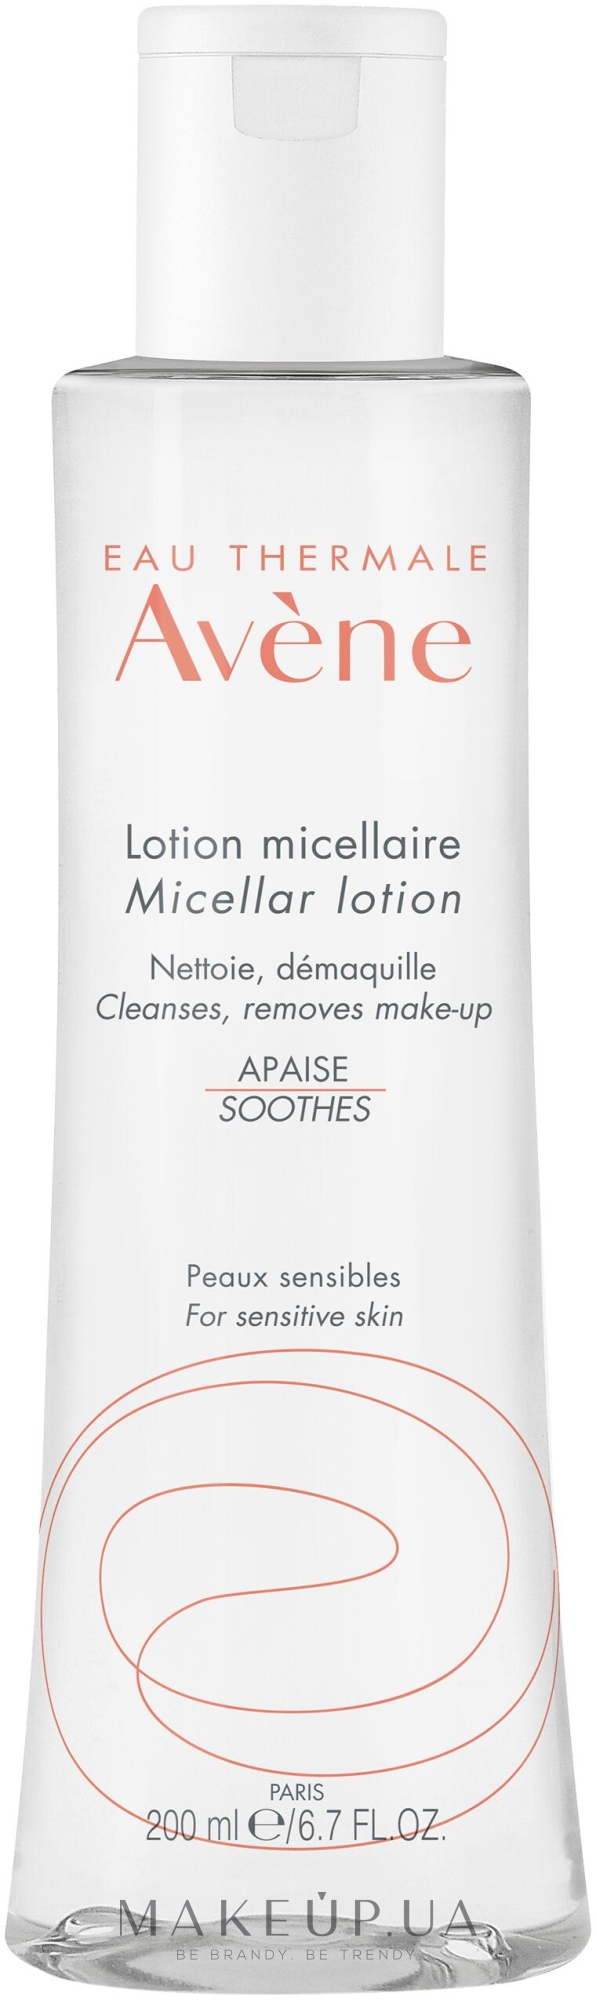 Лосьон мицеллярный для очистки и снятия макияжа - Avene Micellar Lotion For Cleaning And Removing Make-Up — фото 200ml